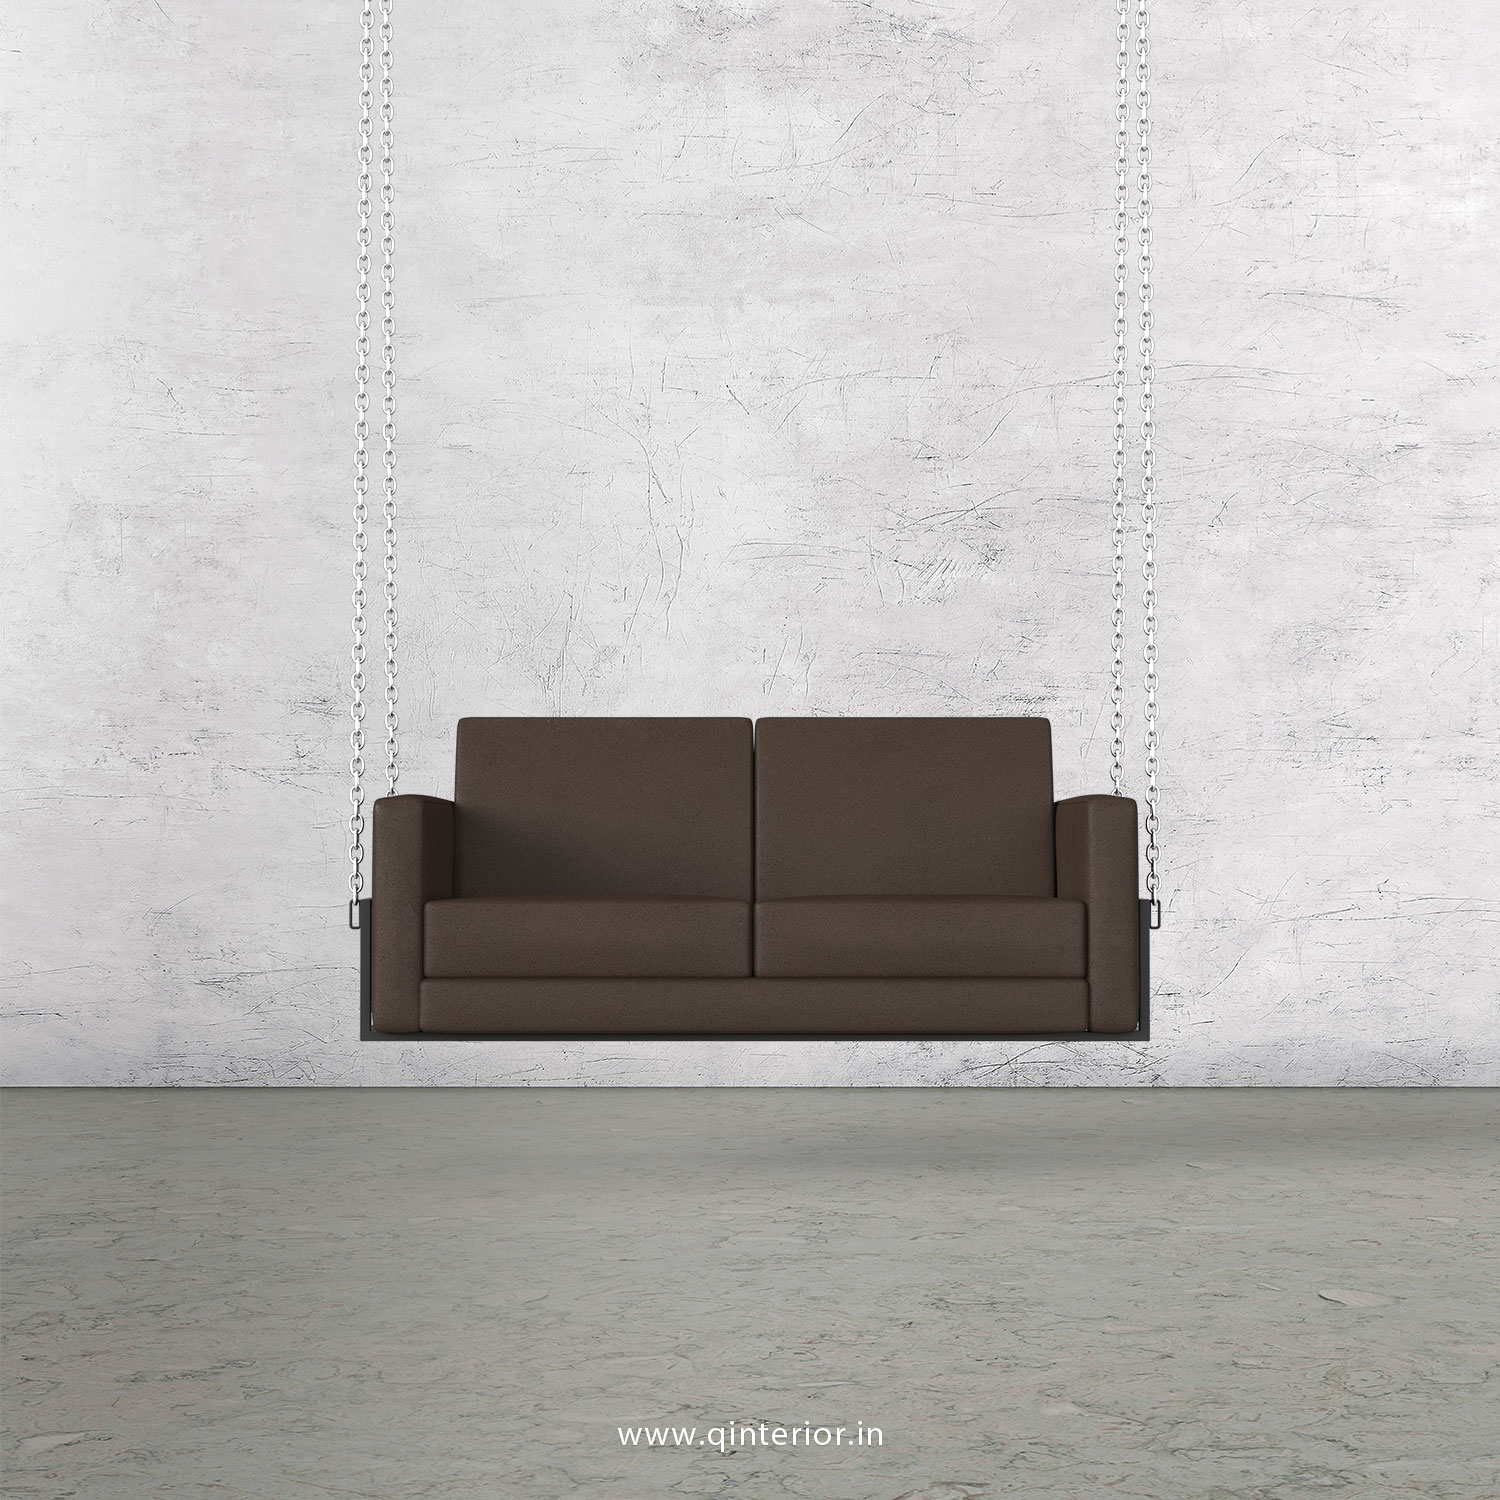 NIRVANA 2 Seater Swing Sofa in Fab Leather Fabric - SSF001 FL16